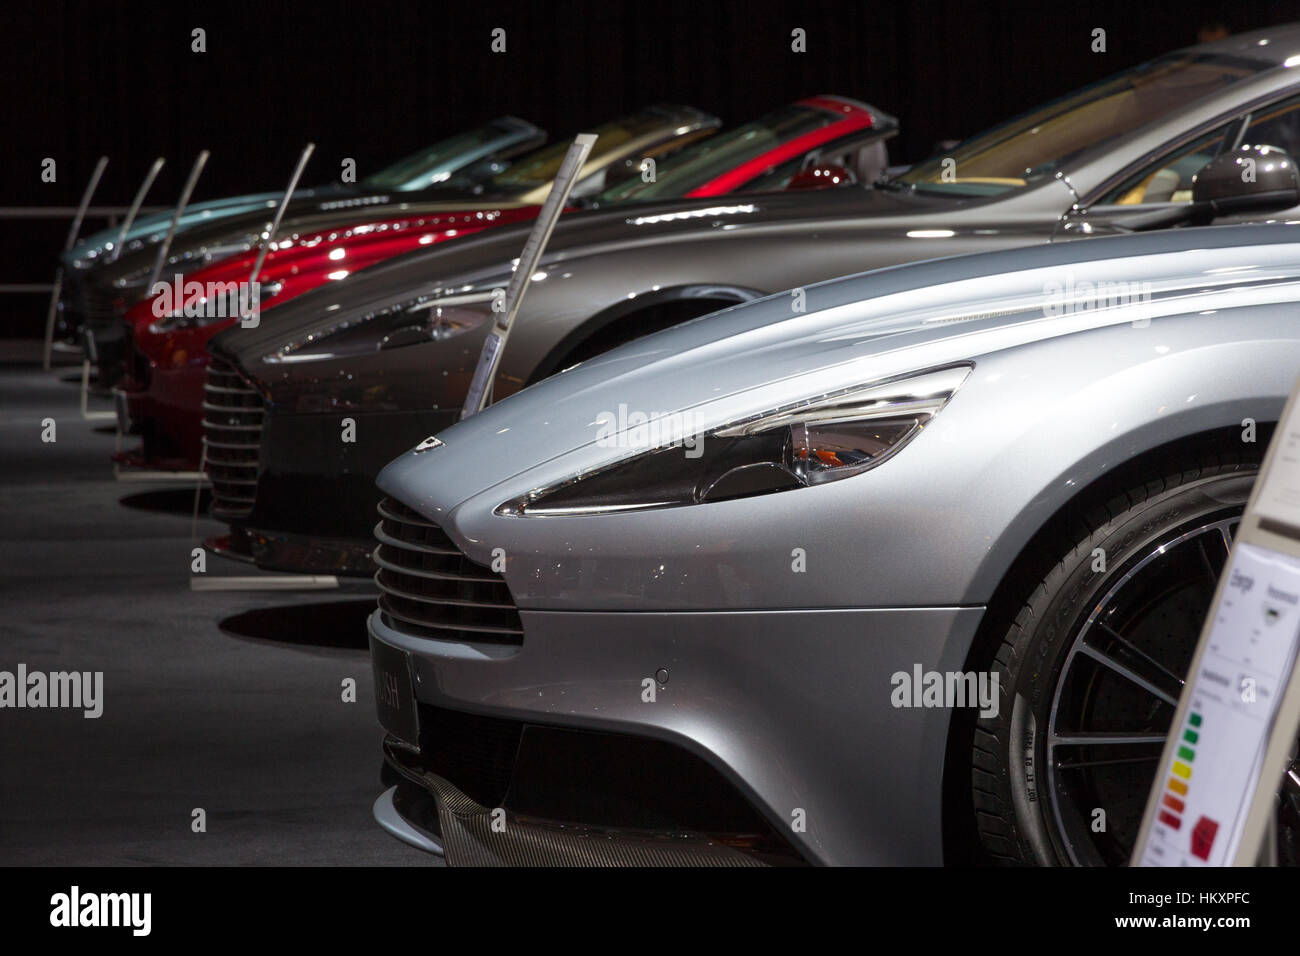 AMSTERDAM - APRIL 16, 2015: Row of Aston Martin sports cars at the AutoRAI 2015. Stock Photo